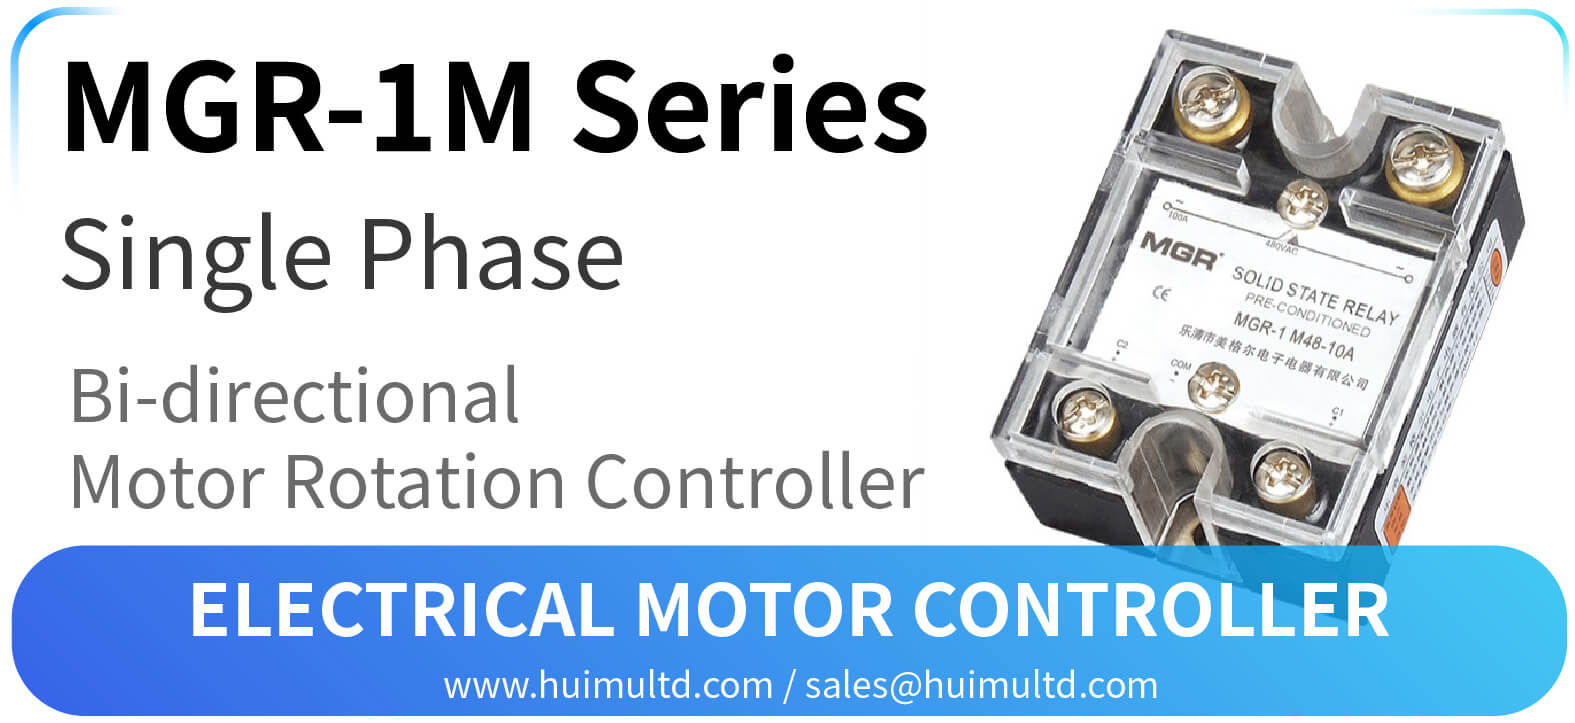 MGR-1M Series Electrical Motor Controller